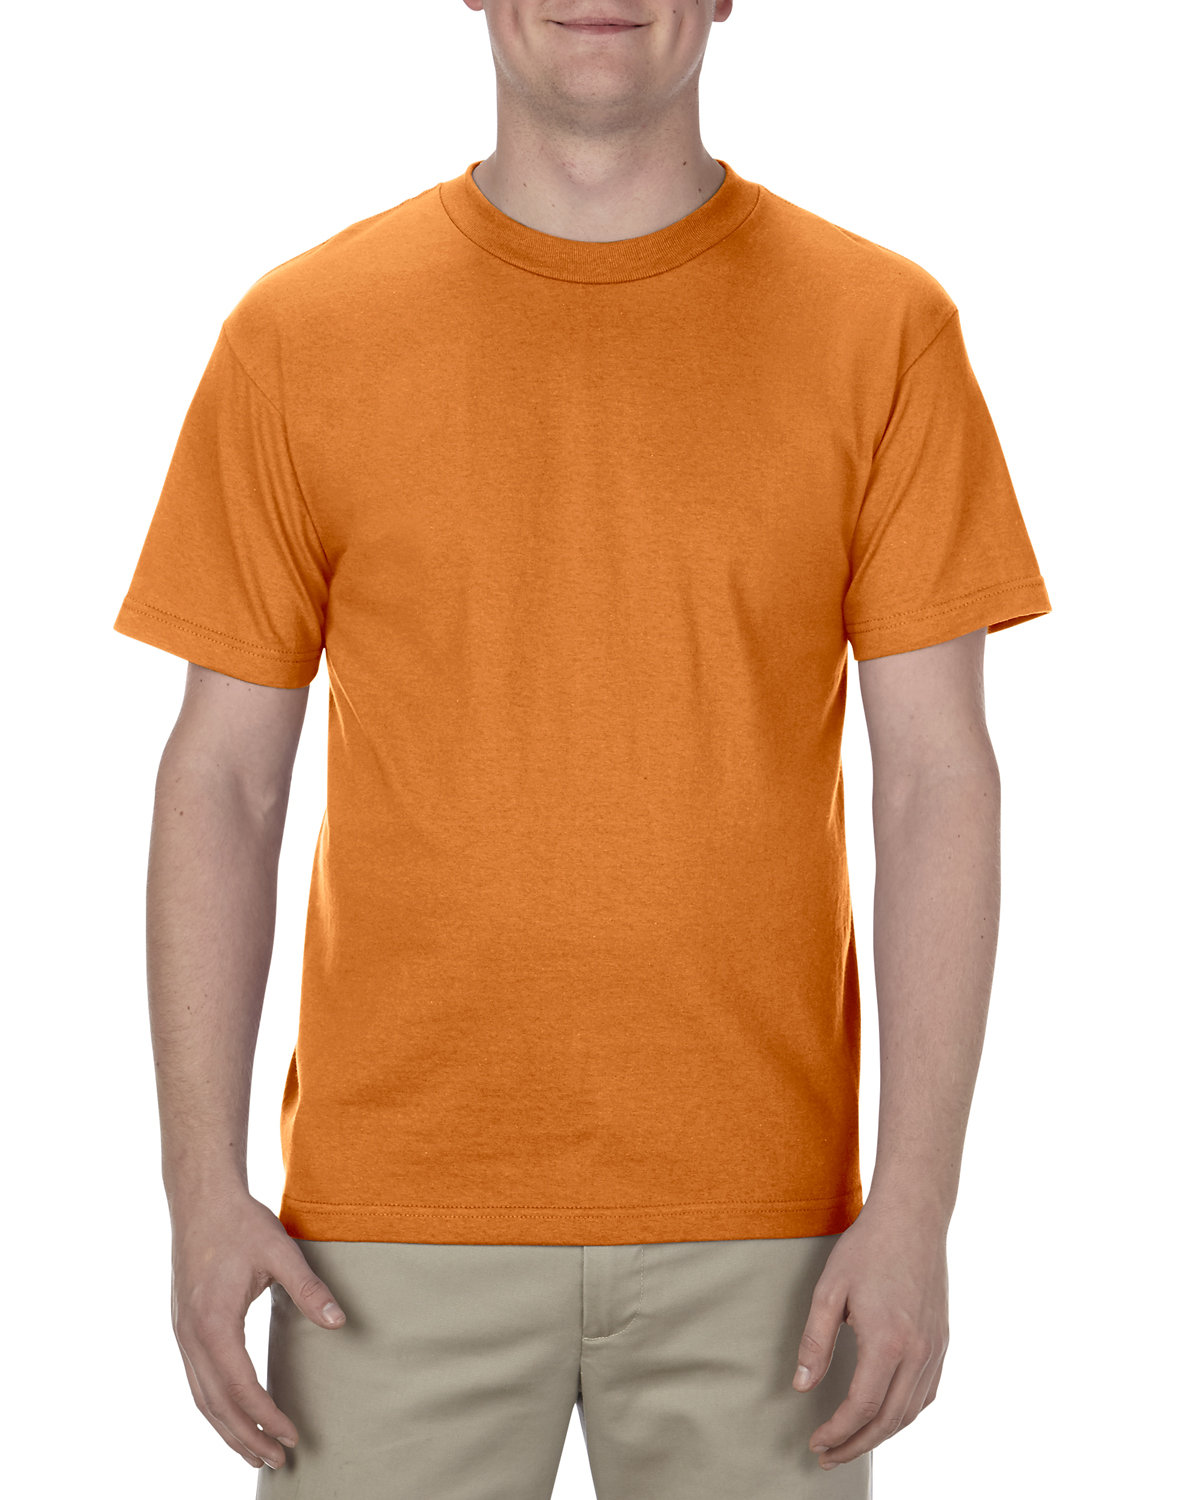 American Apparel Unisex Heavyweight Cotton T-Shirt orange 